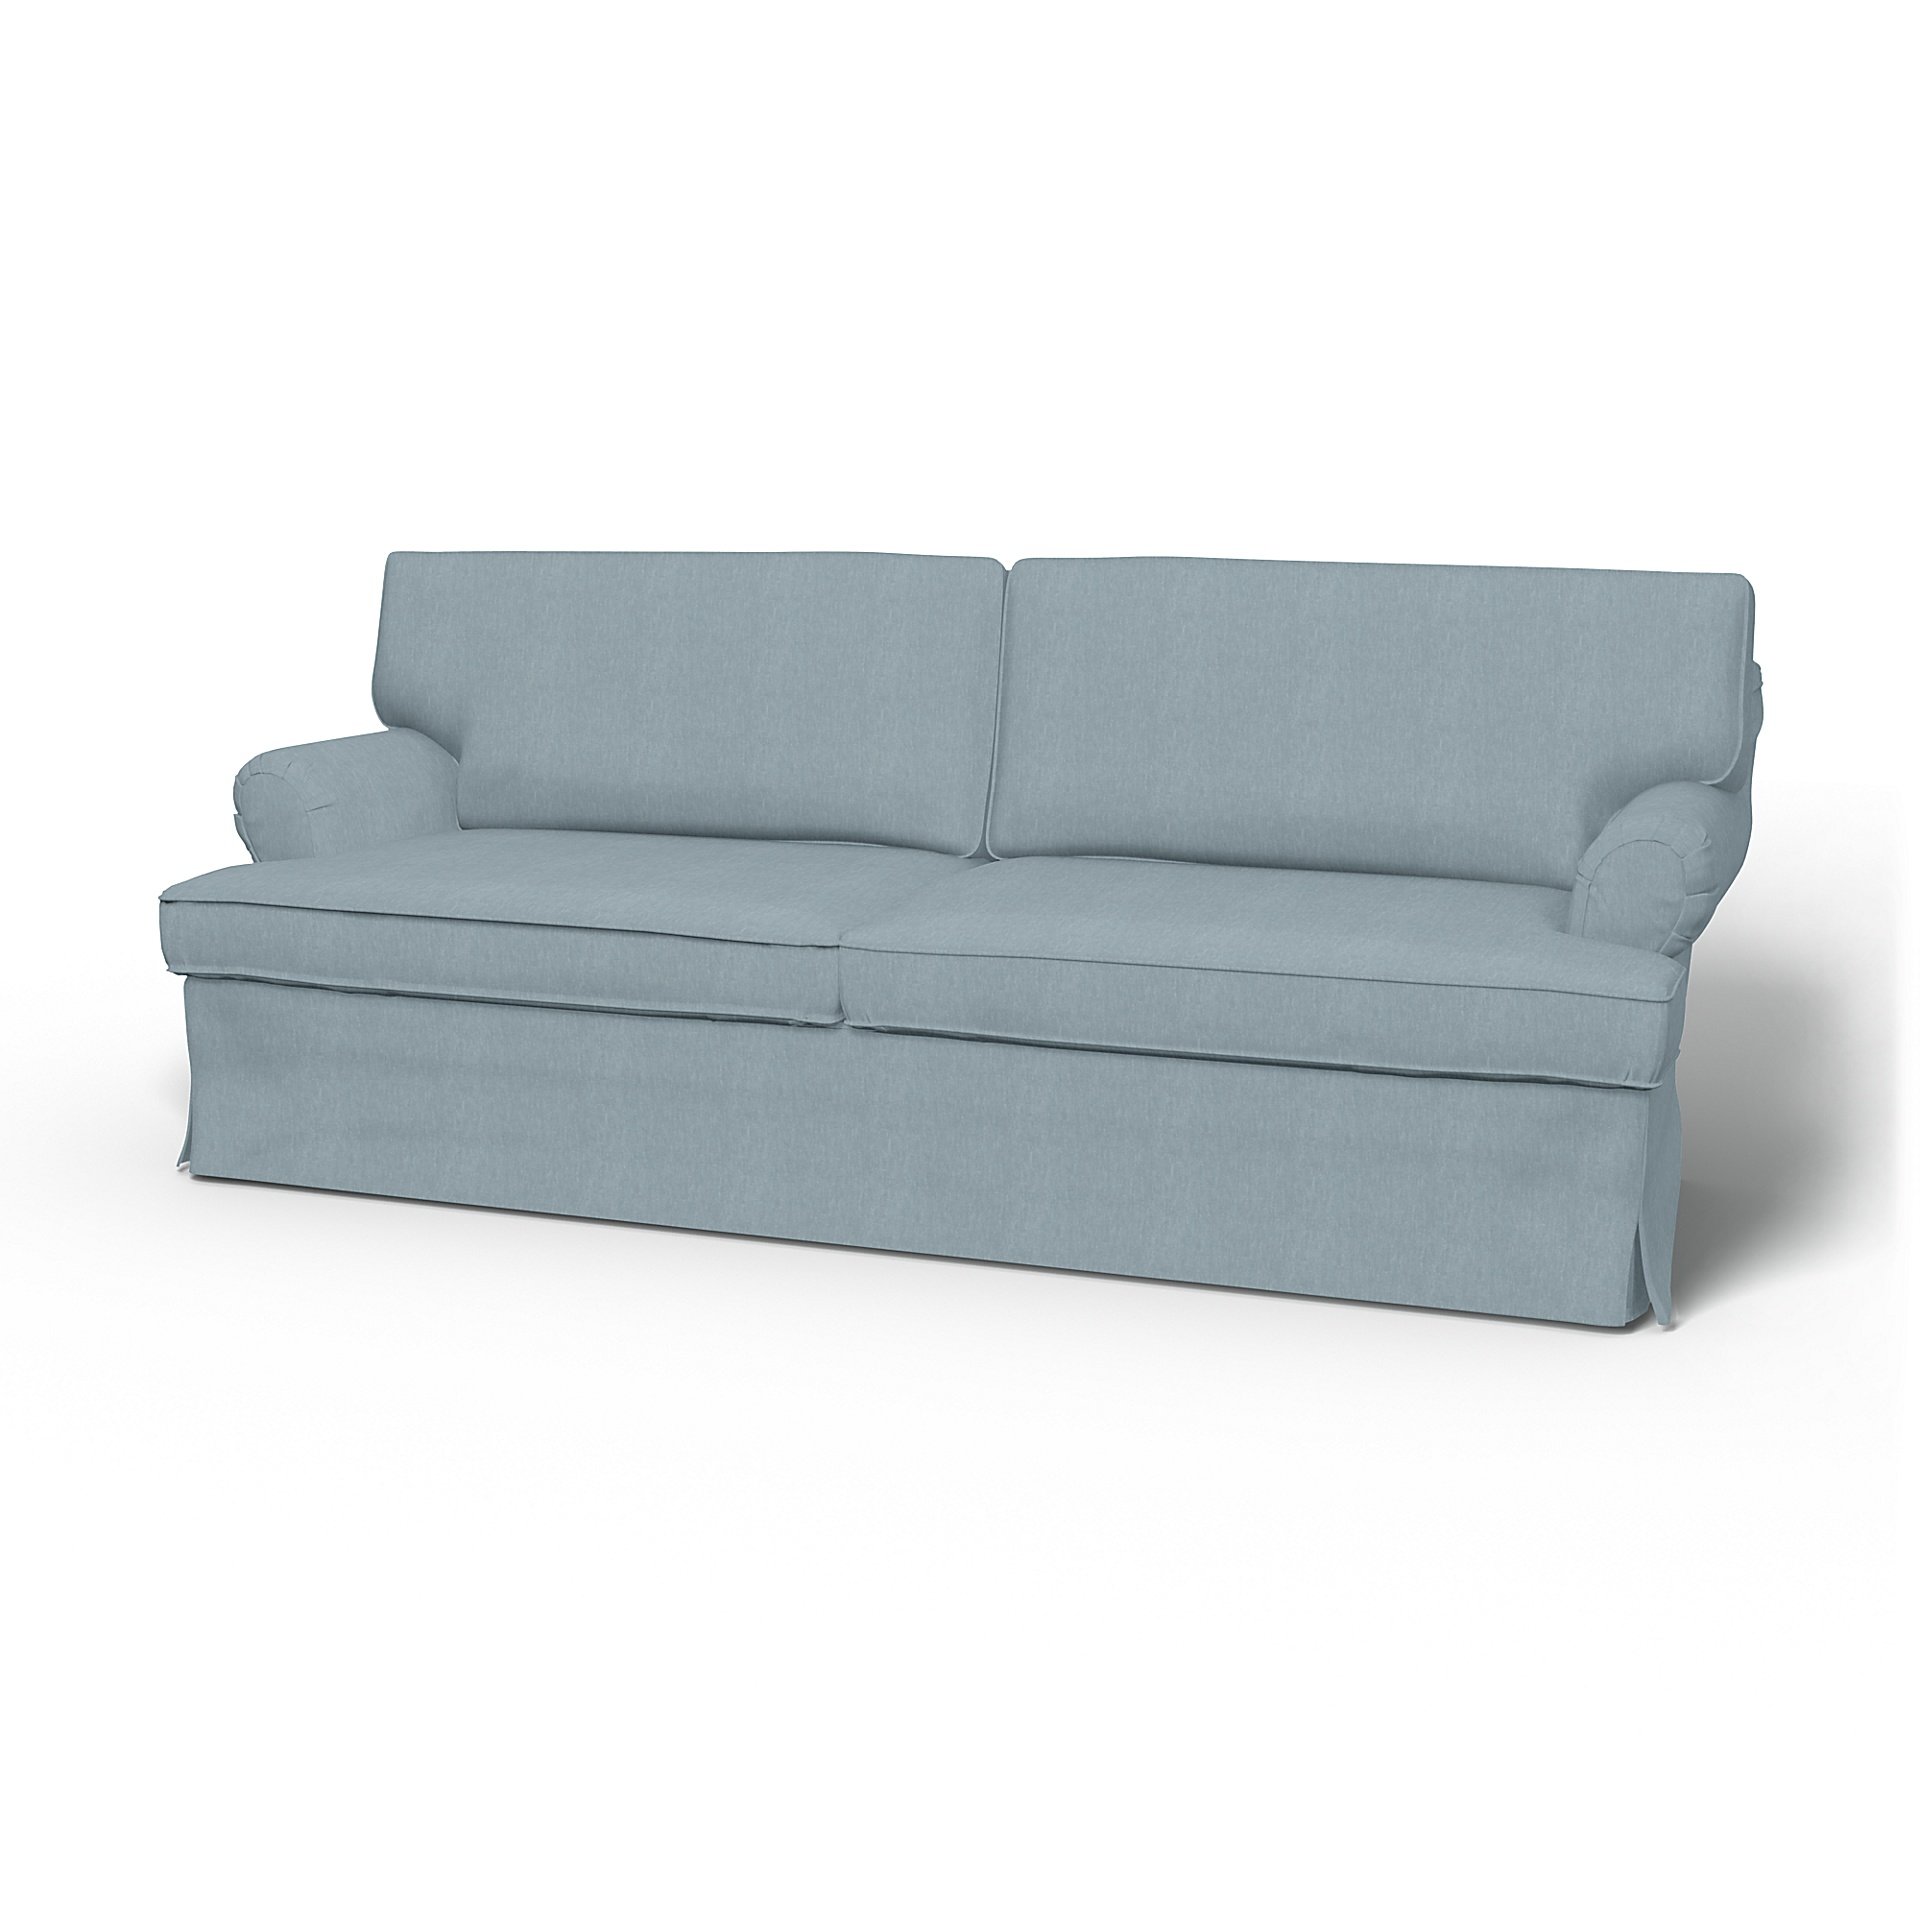 IKEA - Stockholm 3 Seater Sofa Cover (1994-2000), Dusty Blue, Linen - Bemz